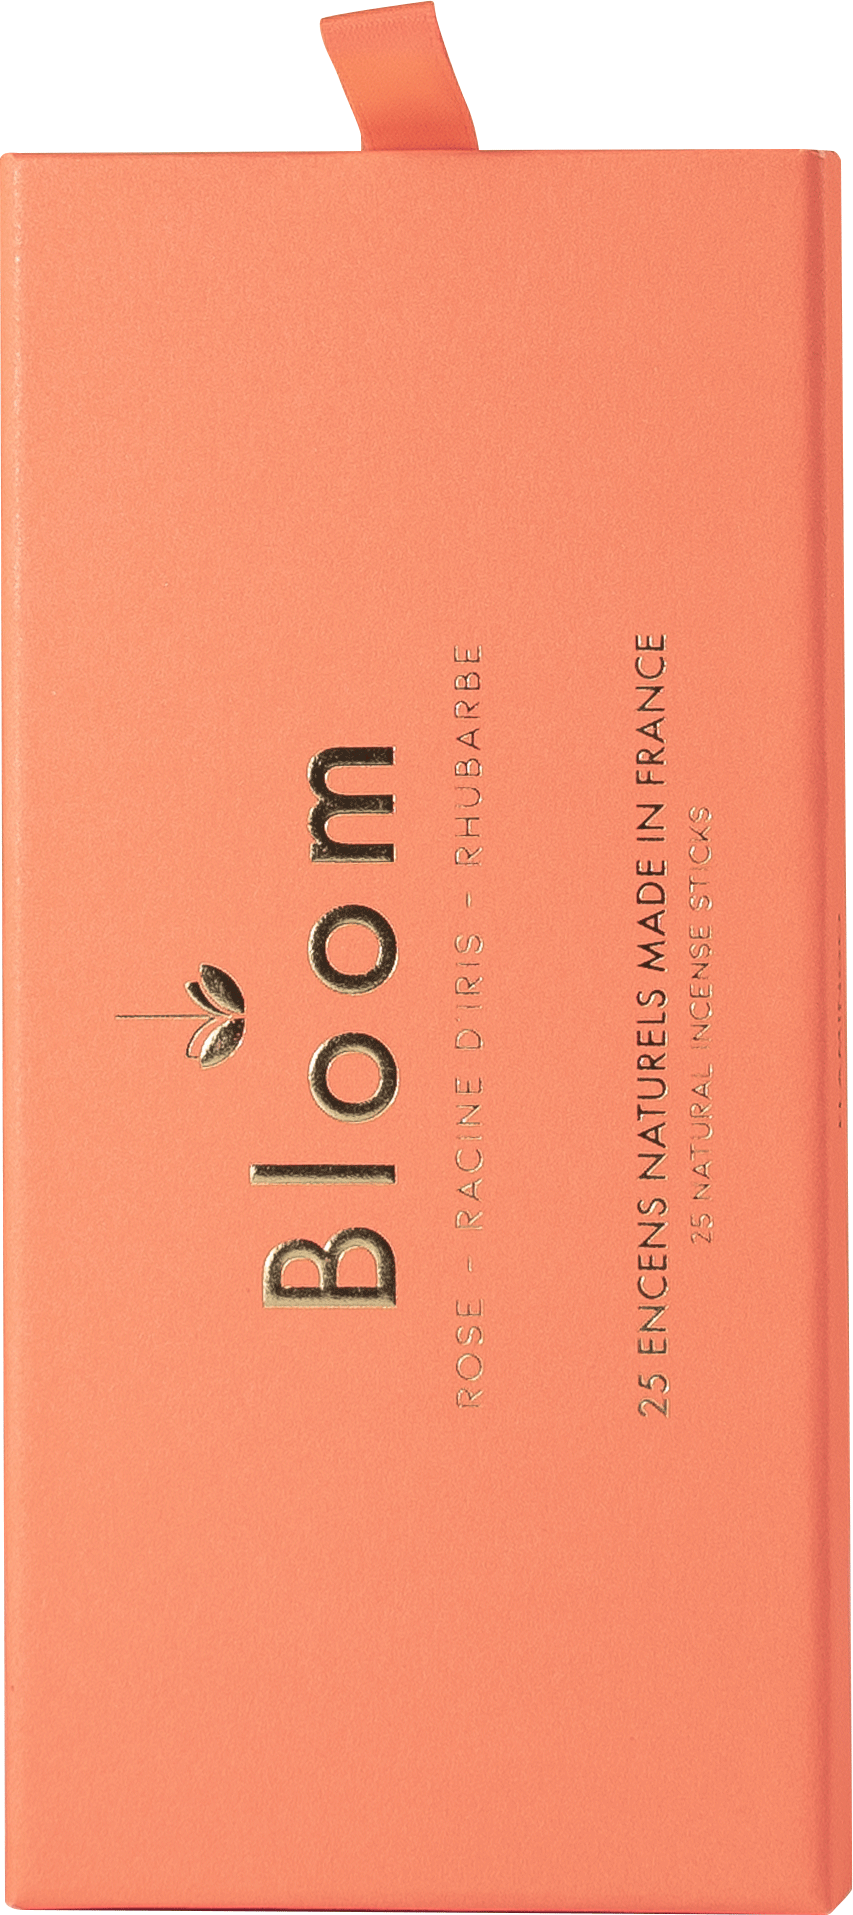 Bloom | Natural French Incense | Set 25